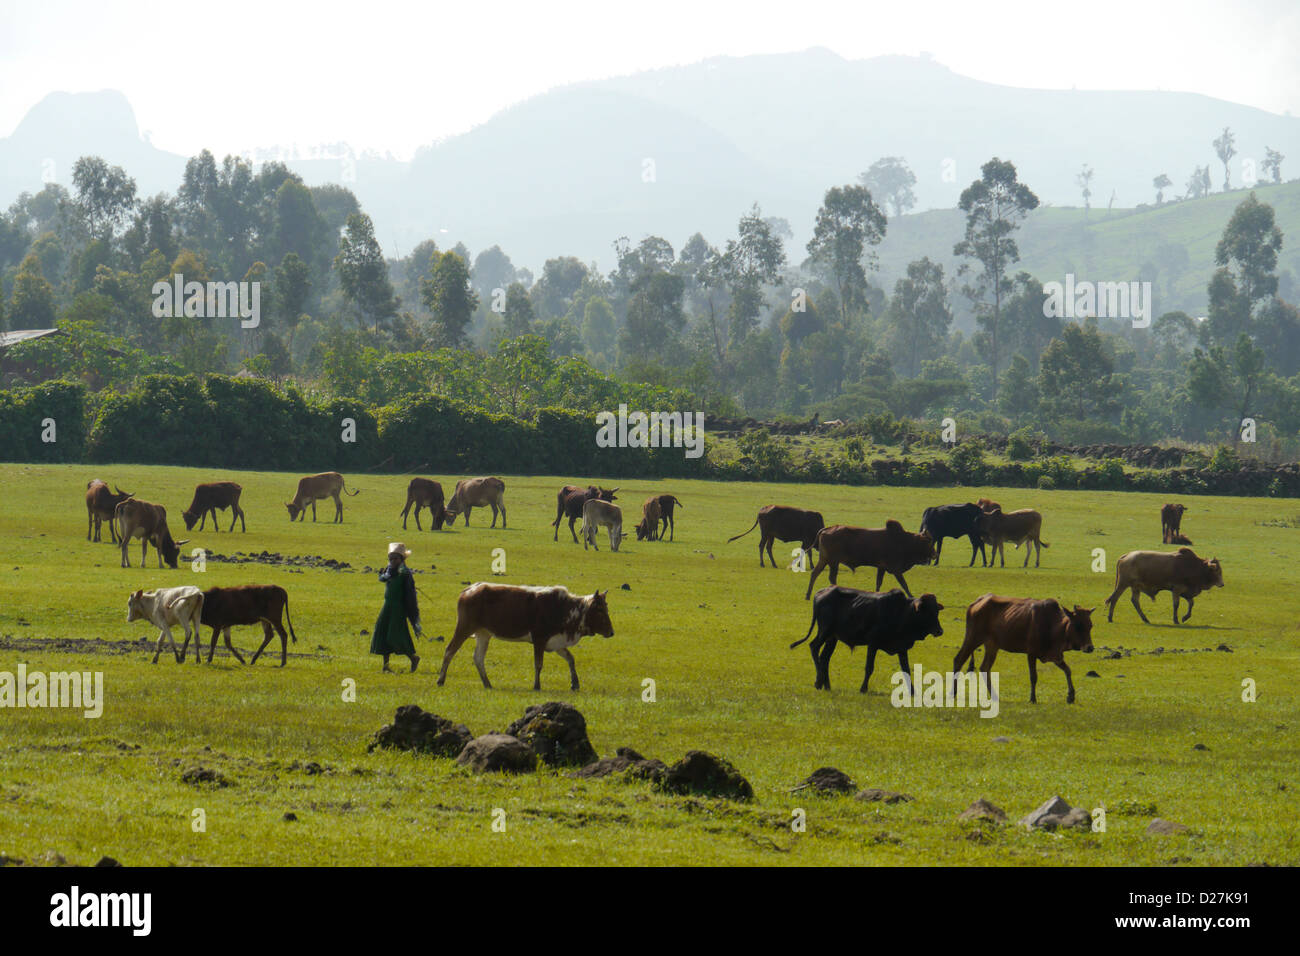 On the road between Chagni and Injibara, Beni Shangul Gumuz region. Cattle grazing on lush pastures. Stock Photo